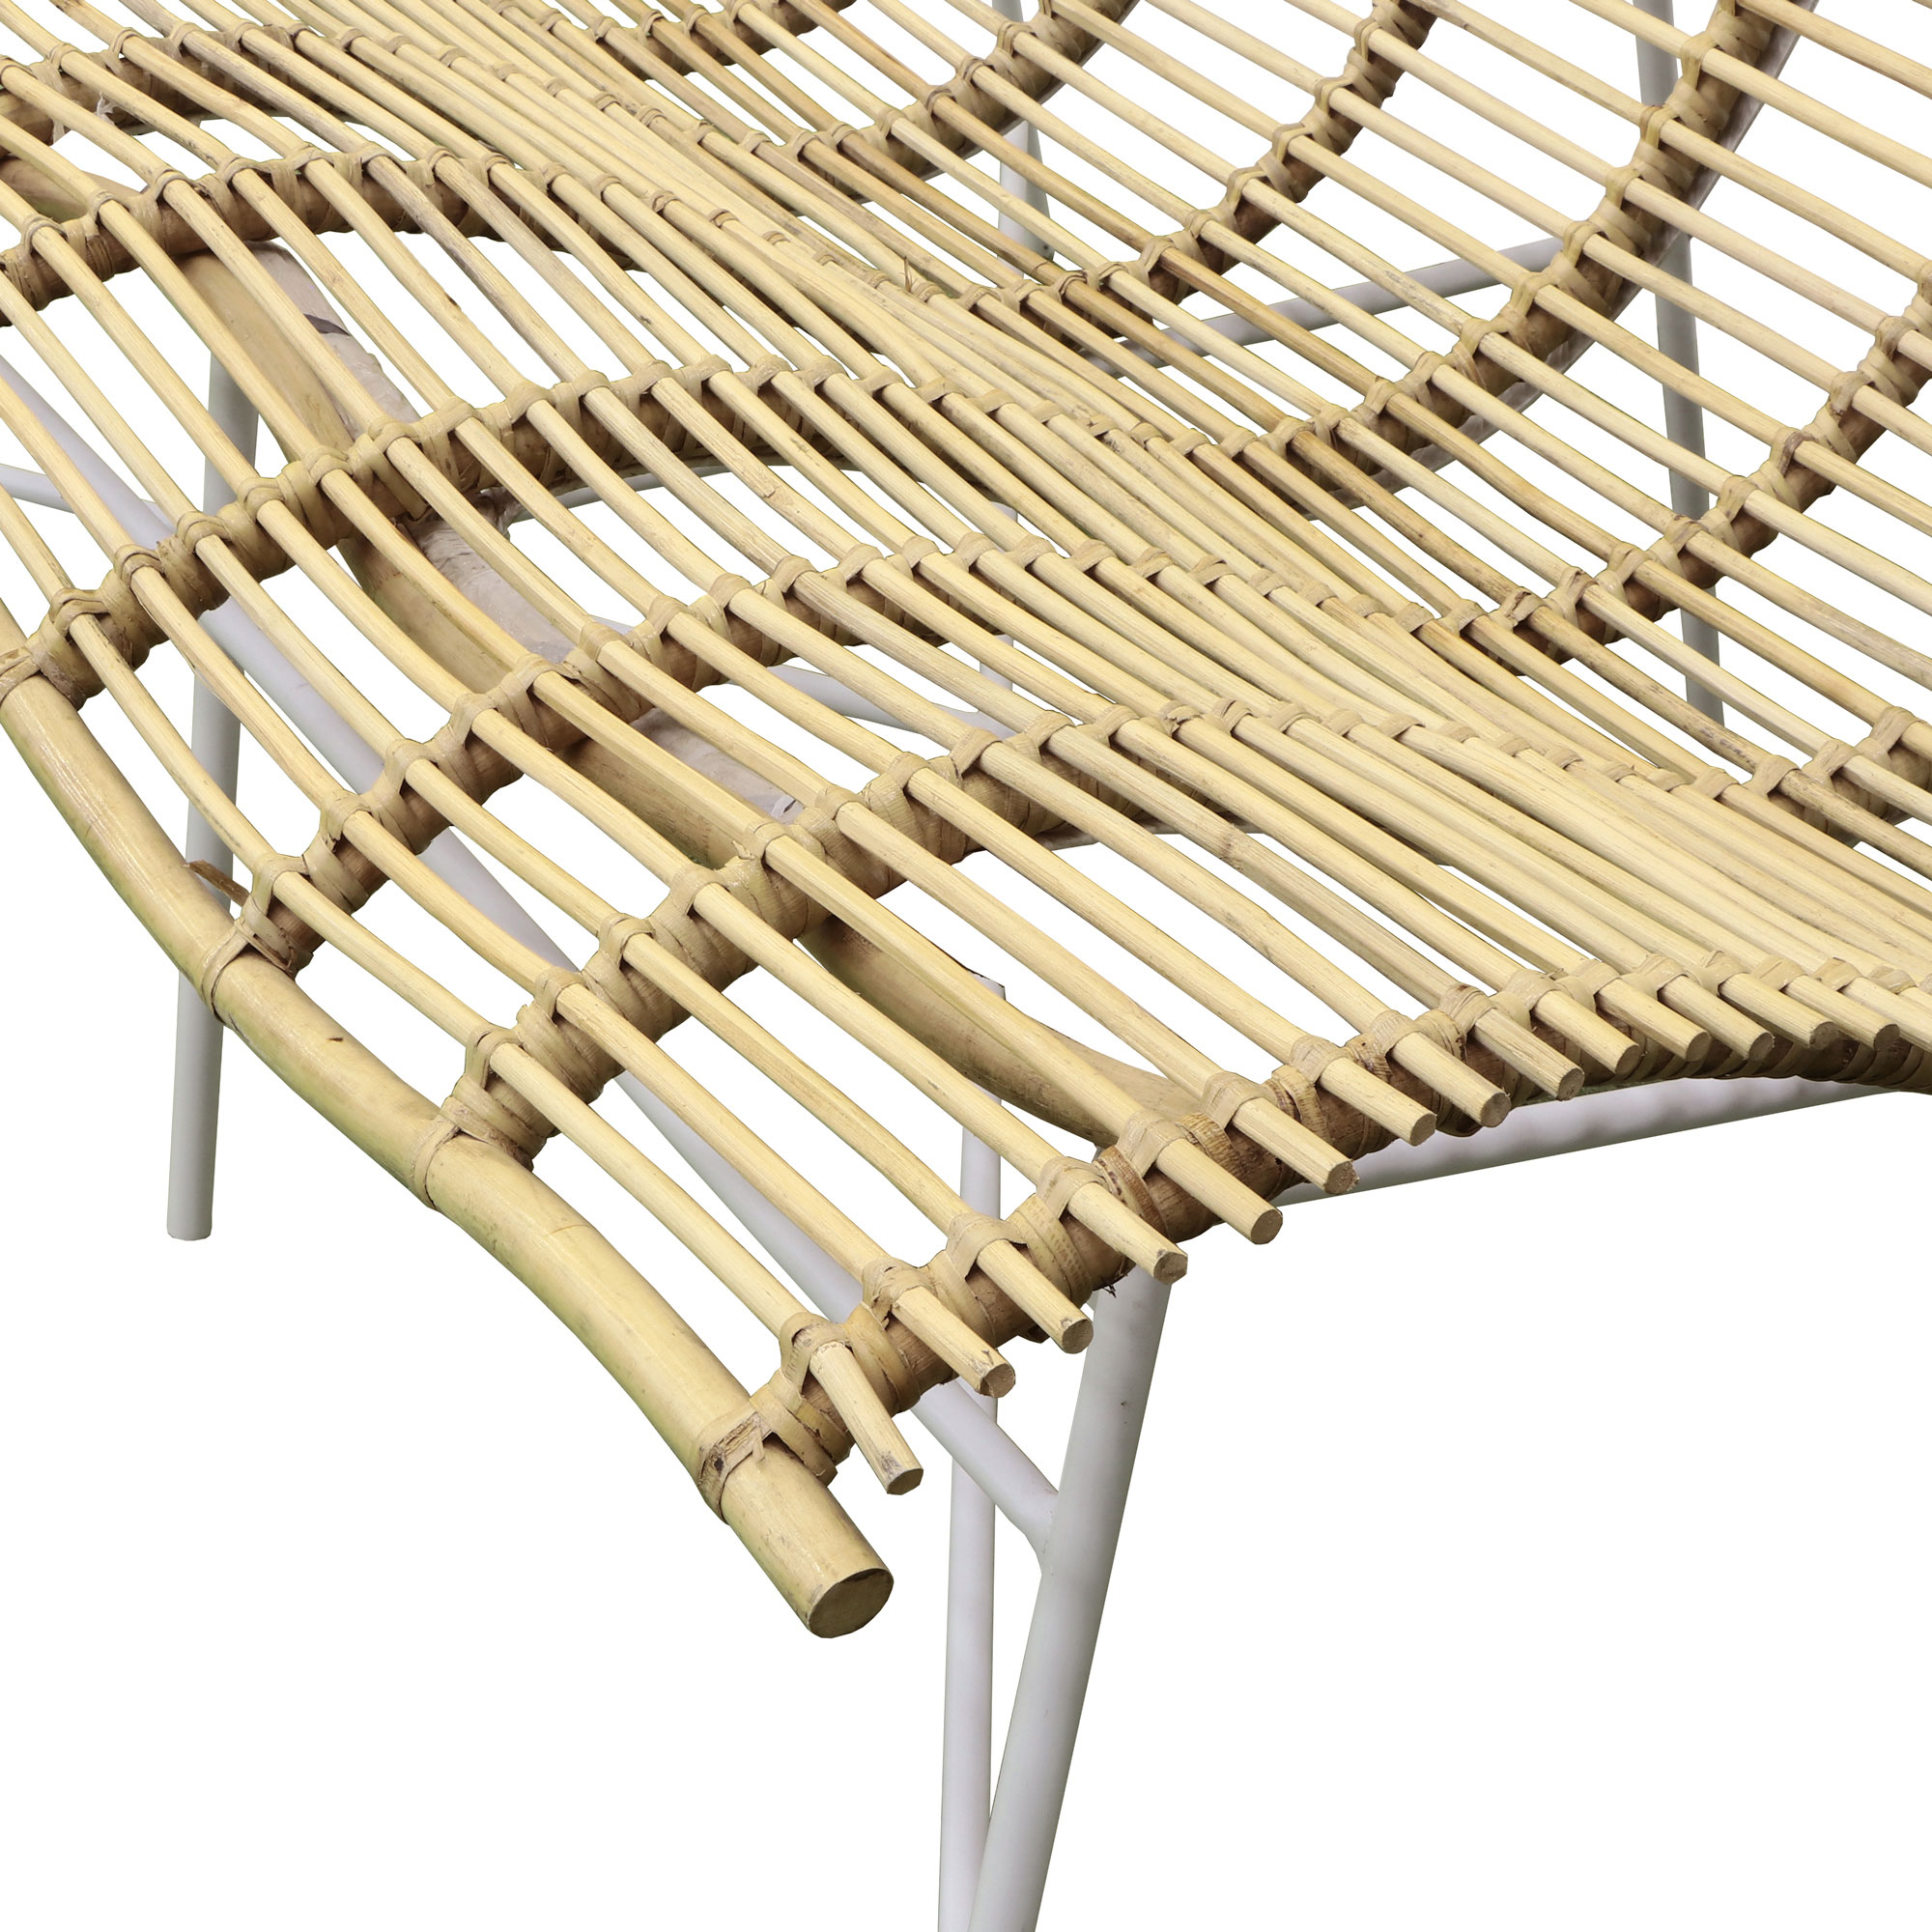 фото Комплект мебели rattan grand nuvali шезлонг с подставкой для ног (rg-ldsf015-ncll/rg-fs015-ncll)